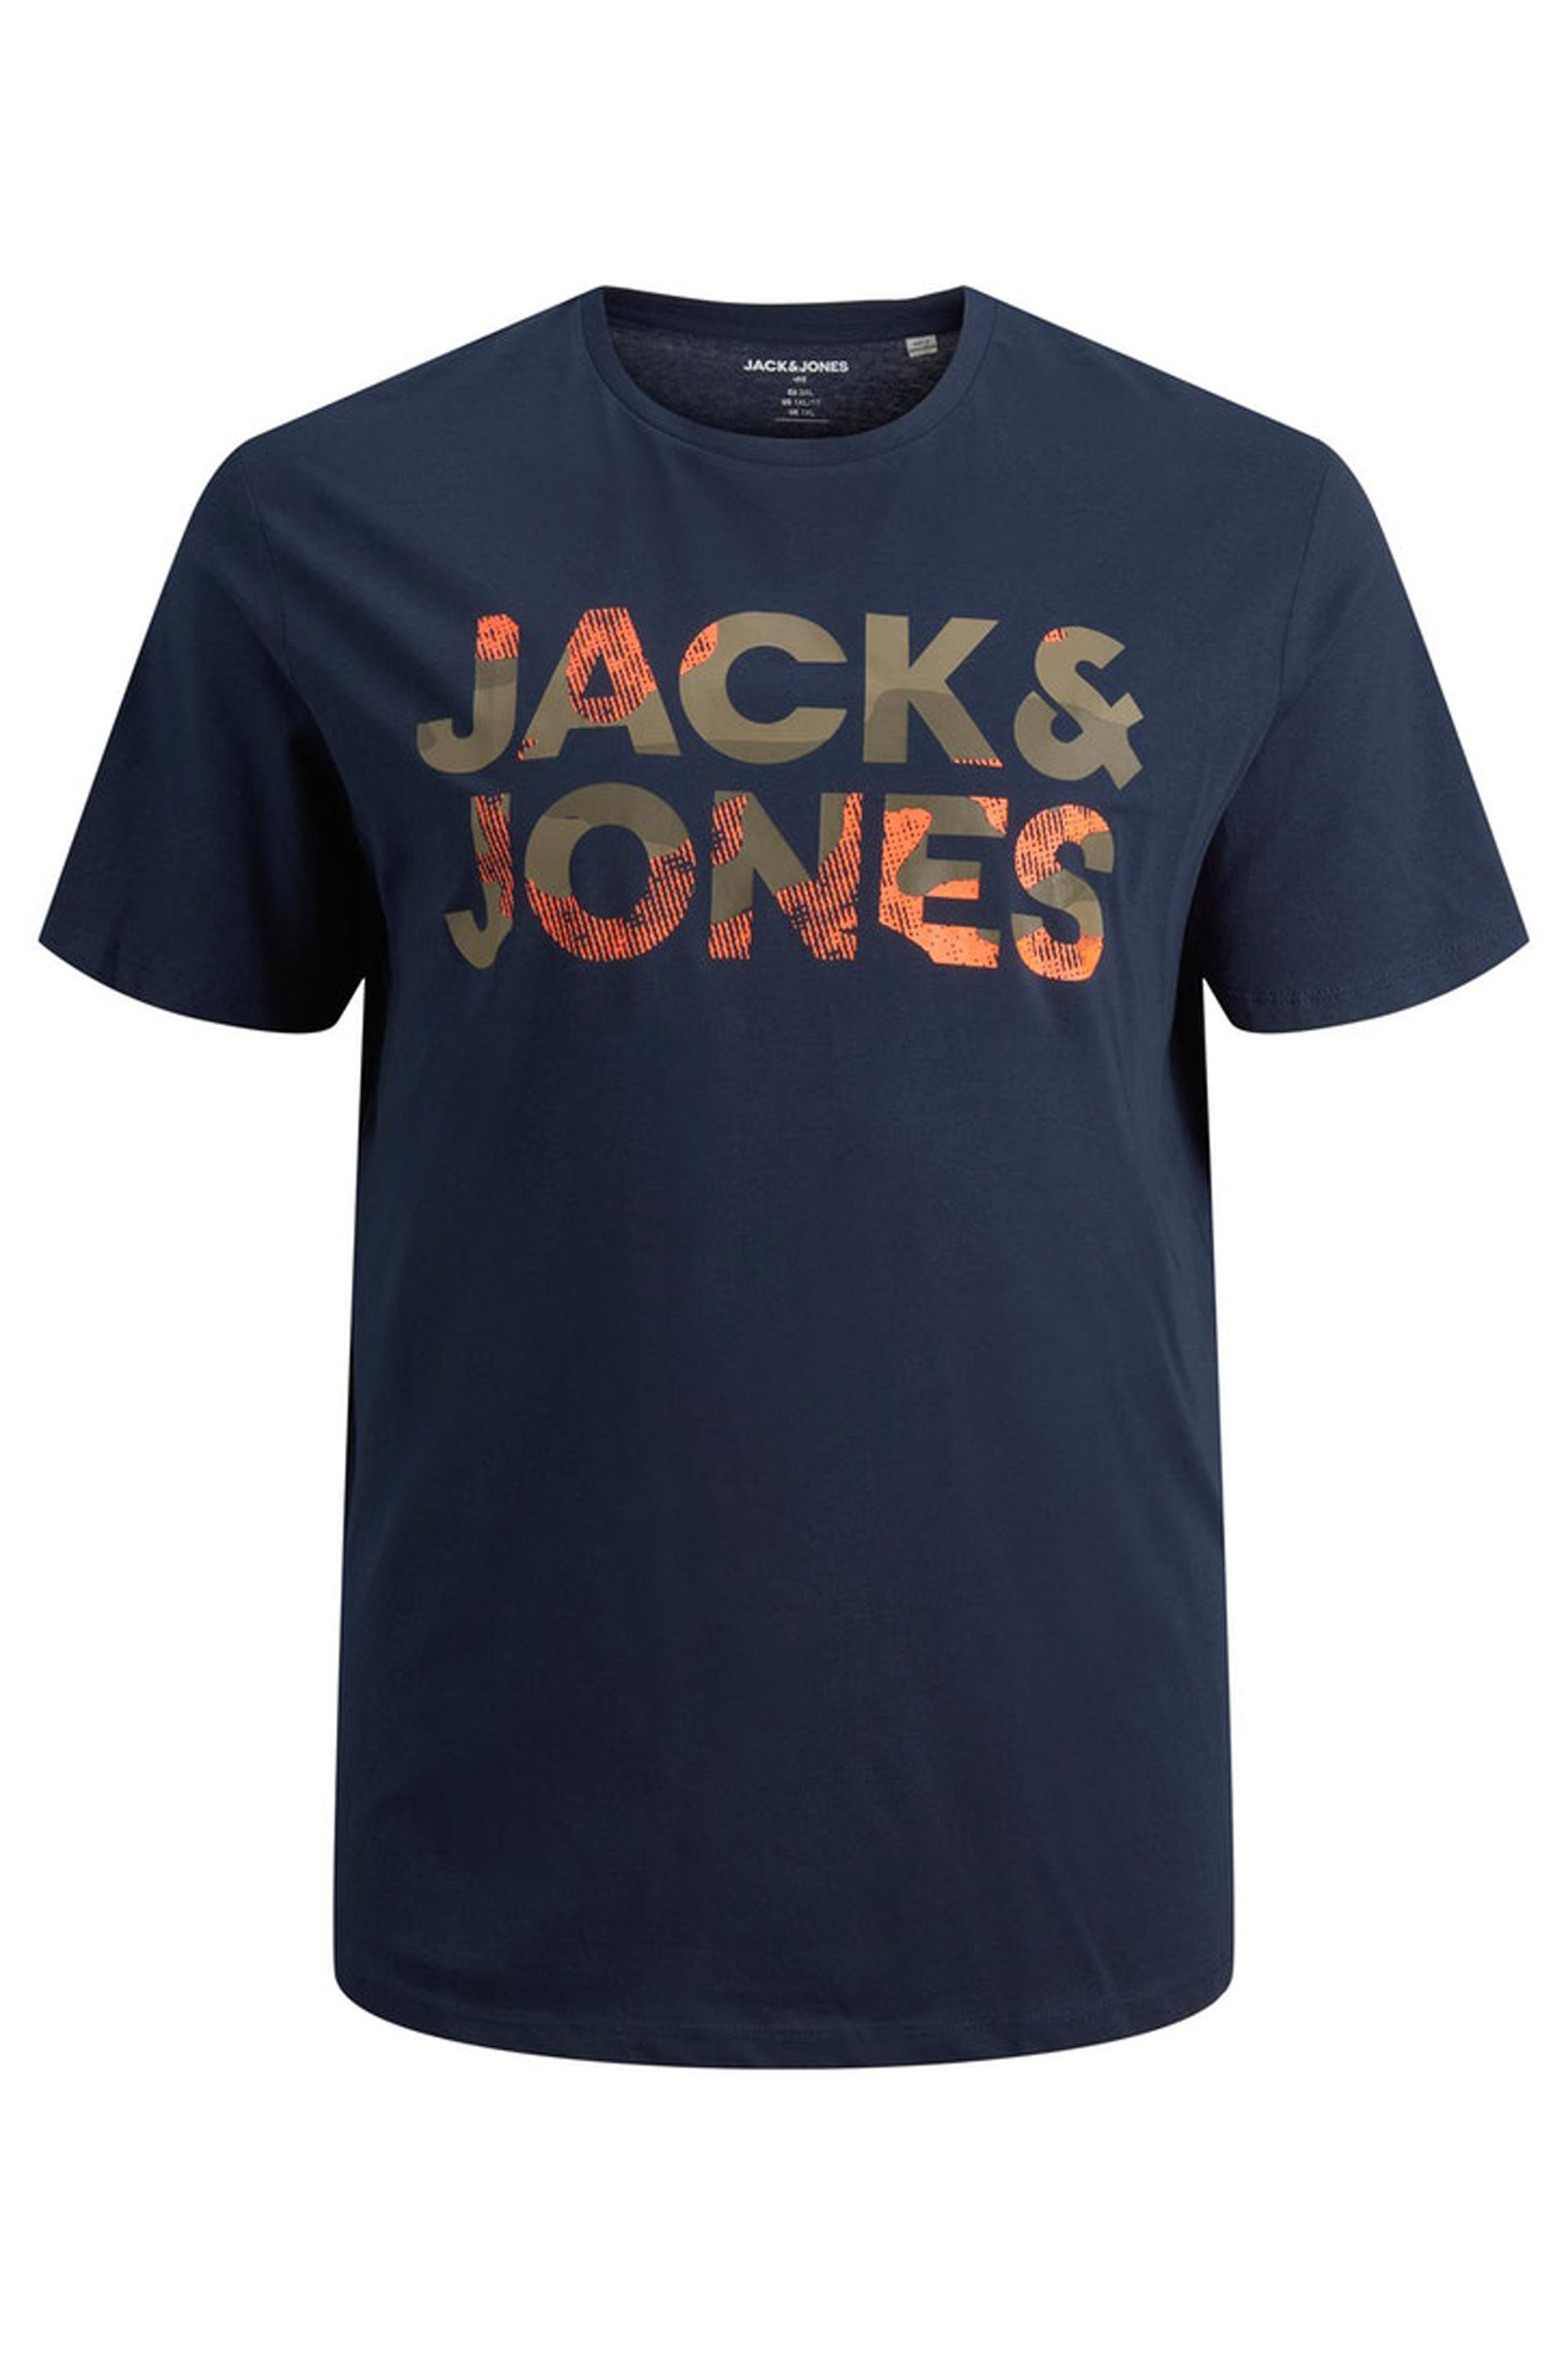 JACK & JONES Navy Camo Logo T-Shirt | BadRhino